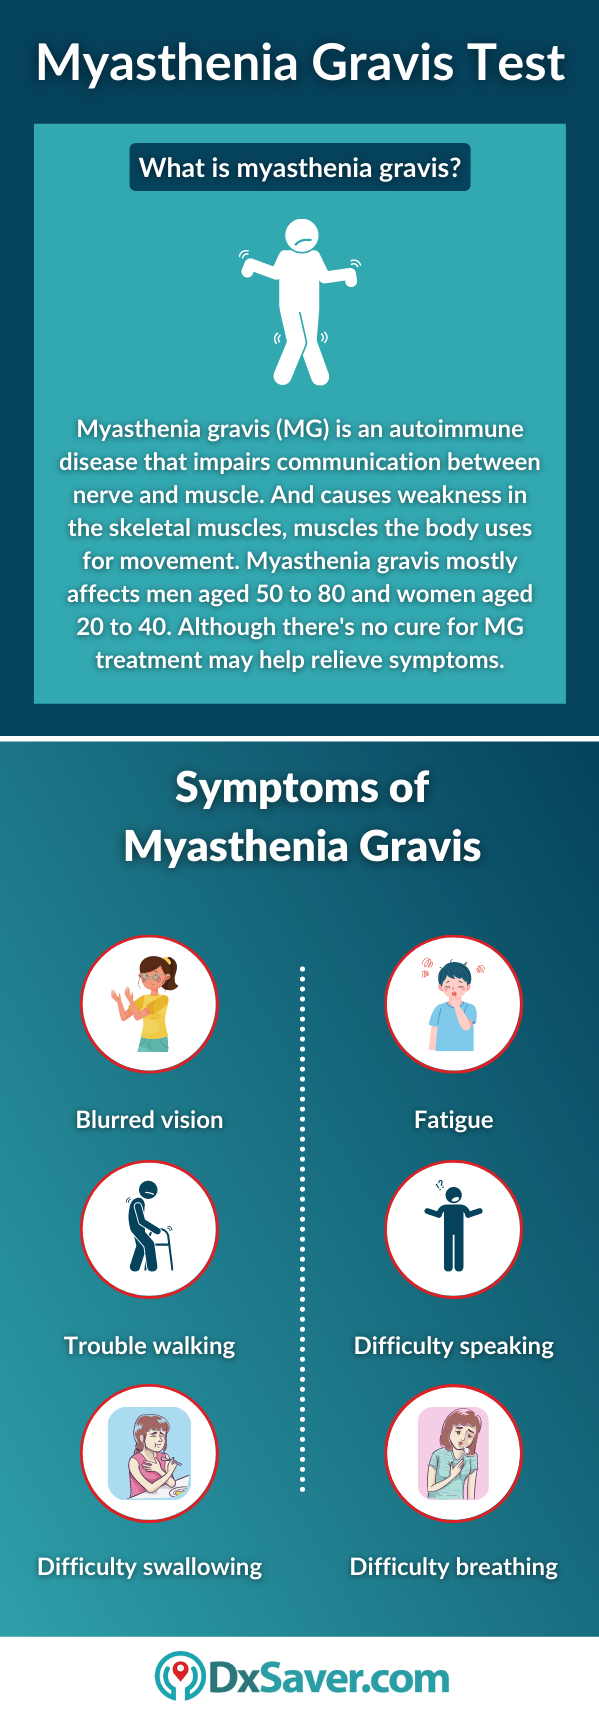 Myasthenia Gravis and its Symptoms